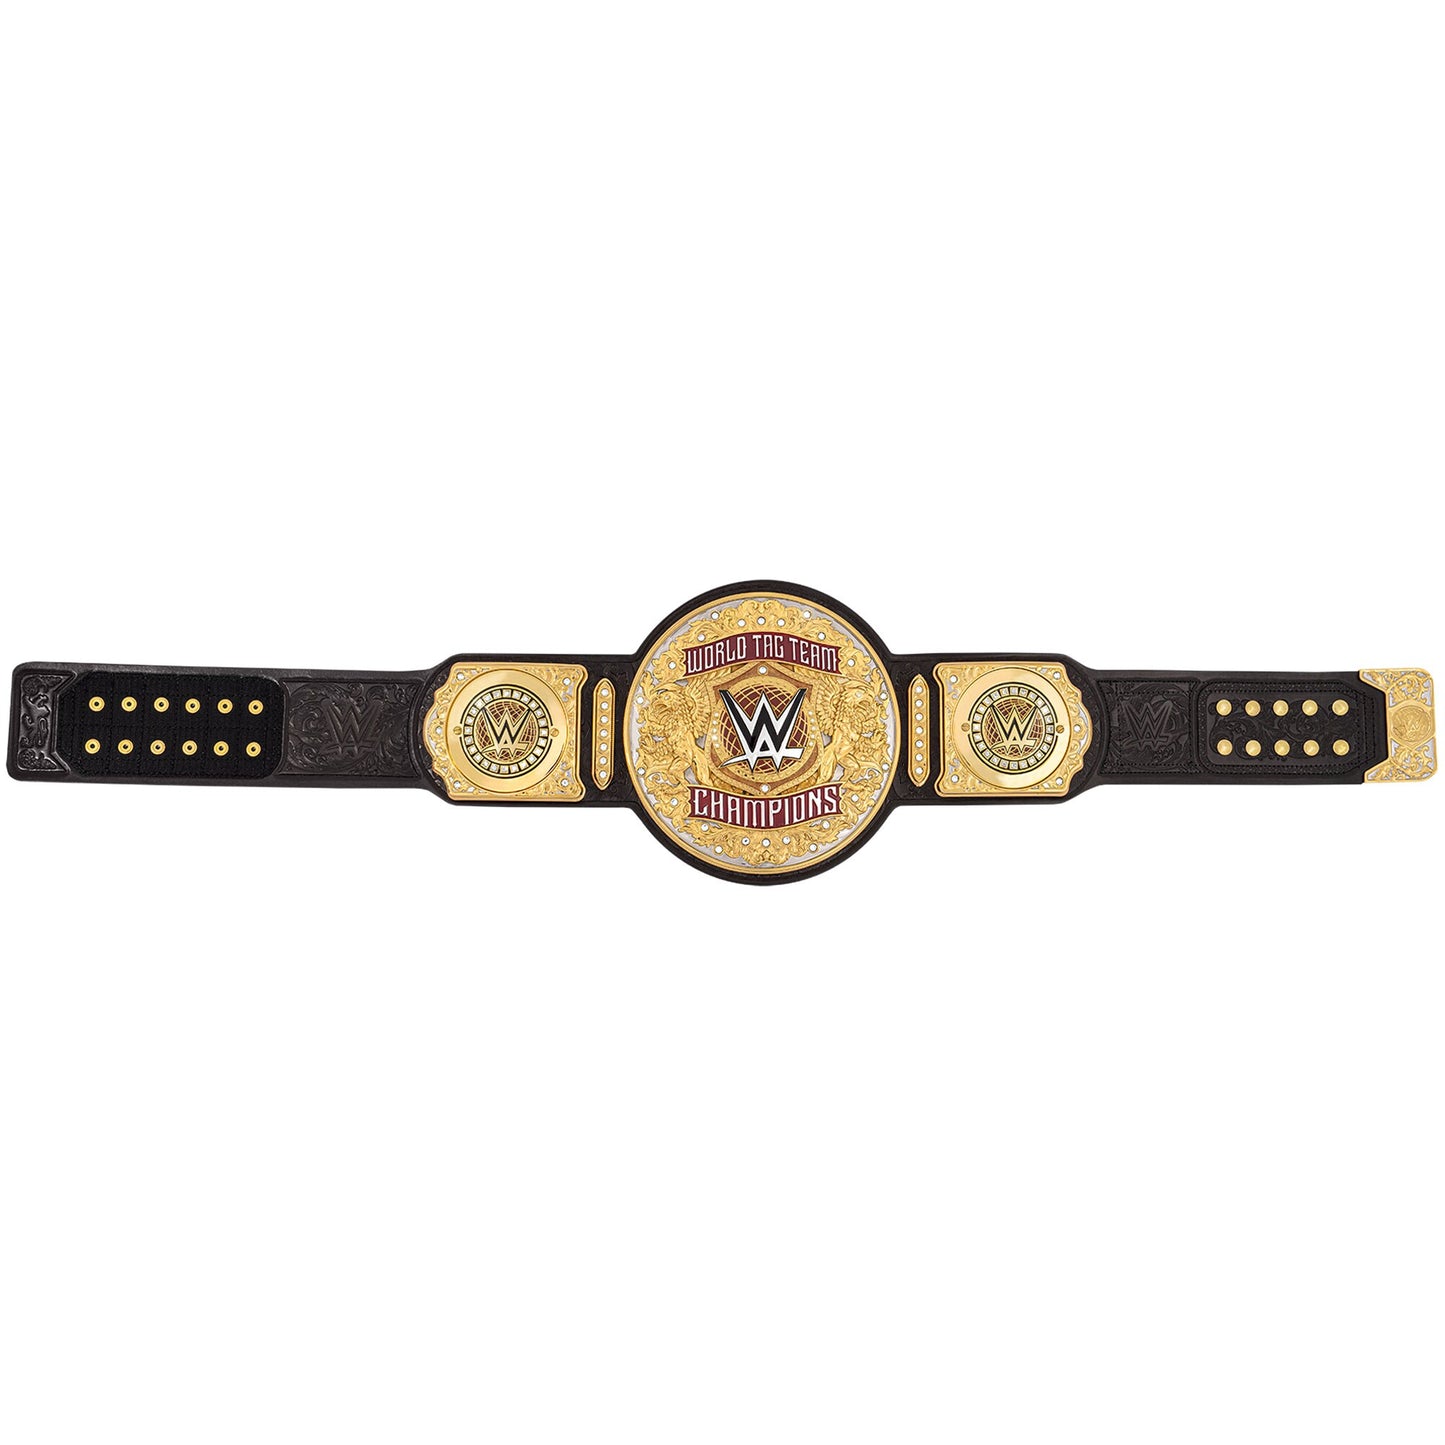 WWE World Tag Team Championship Replica Title Belt